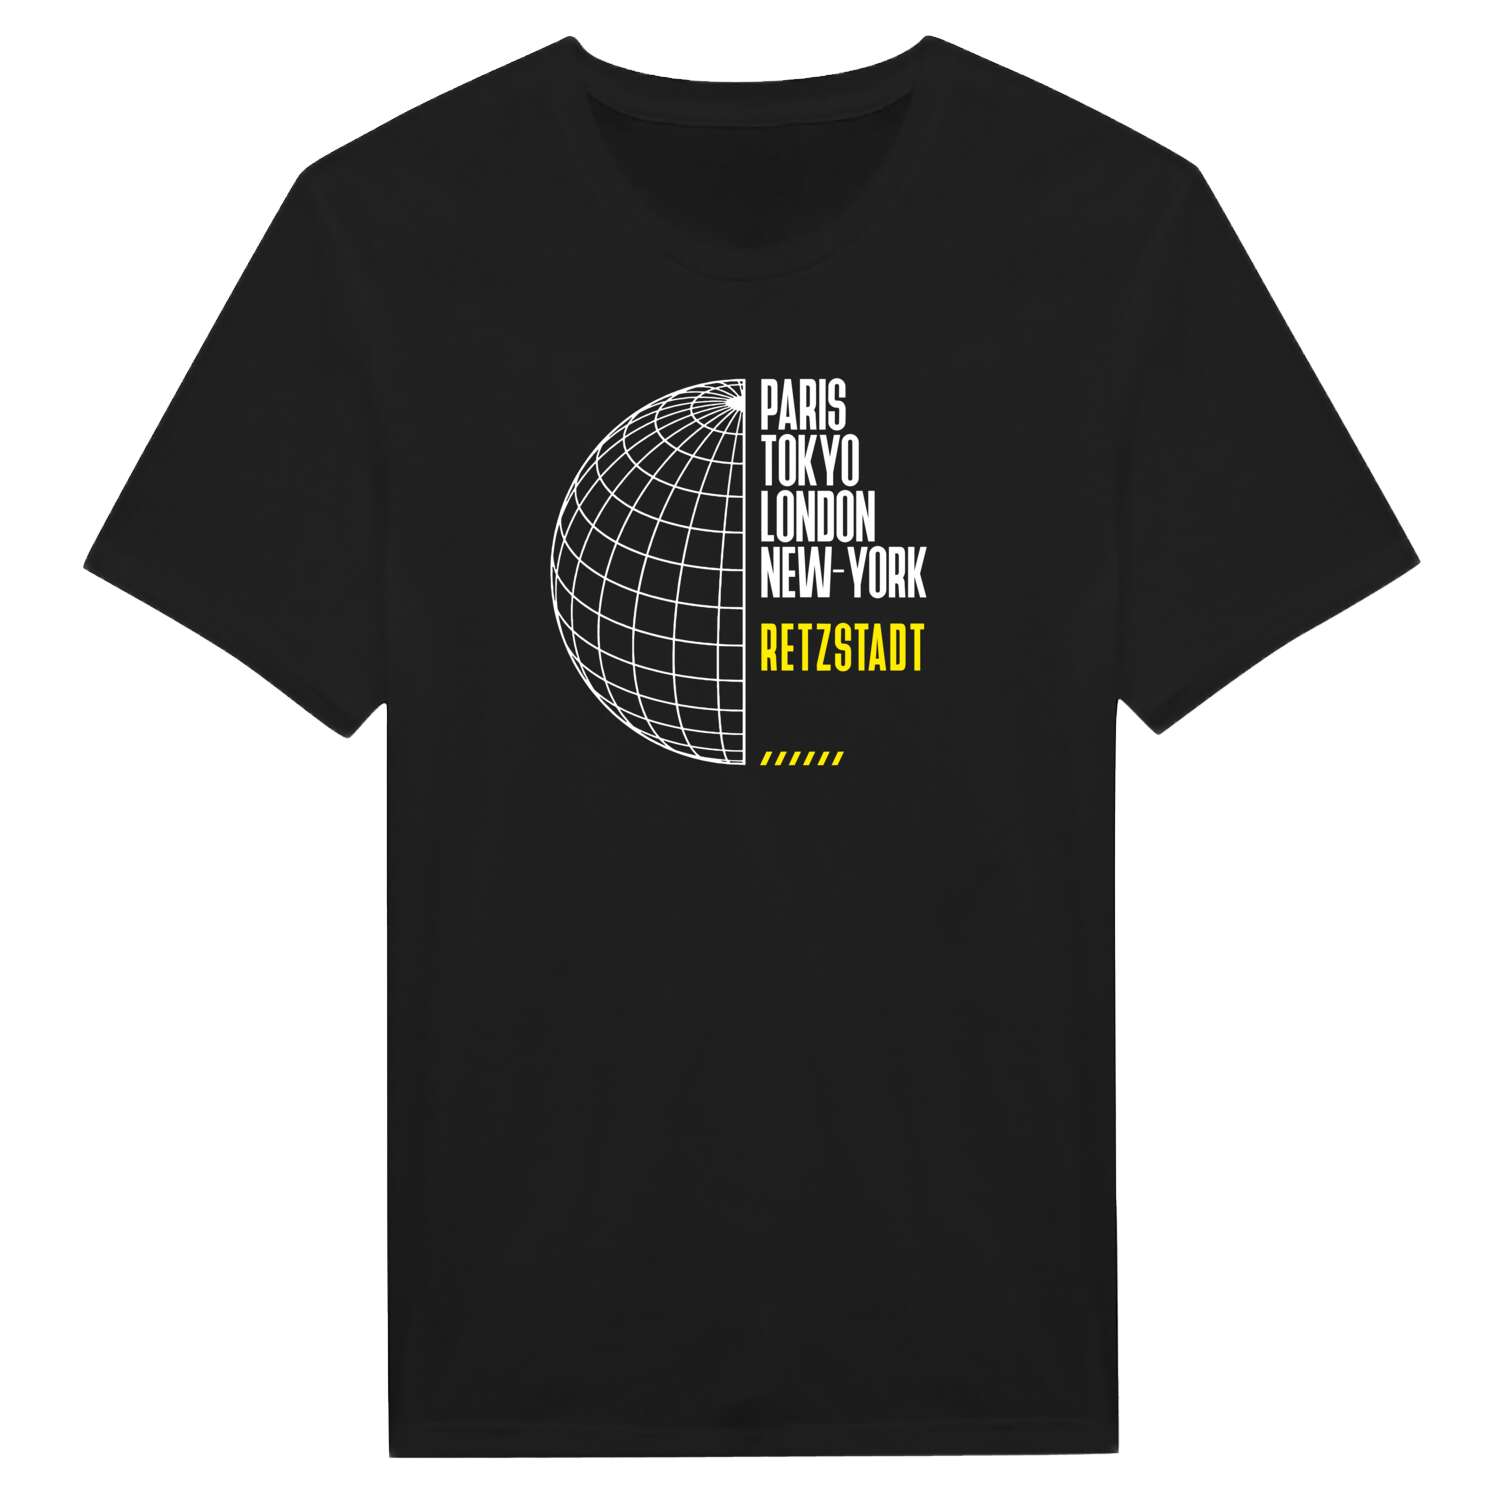 Retzstadt T-Shirt »Paris Tokyo London«